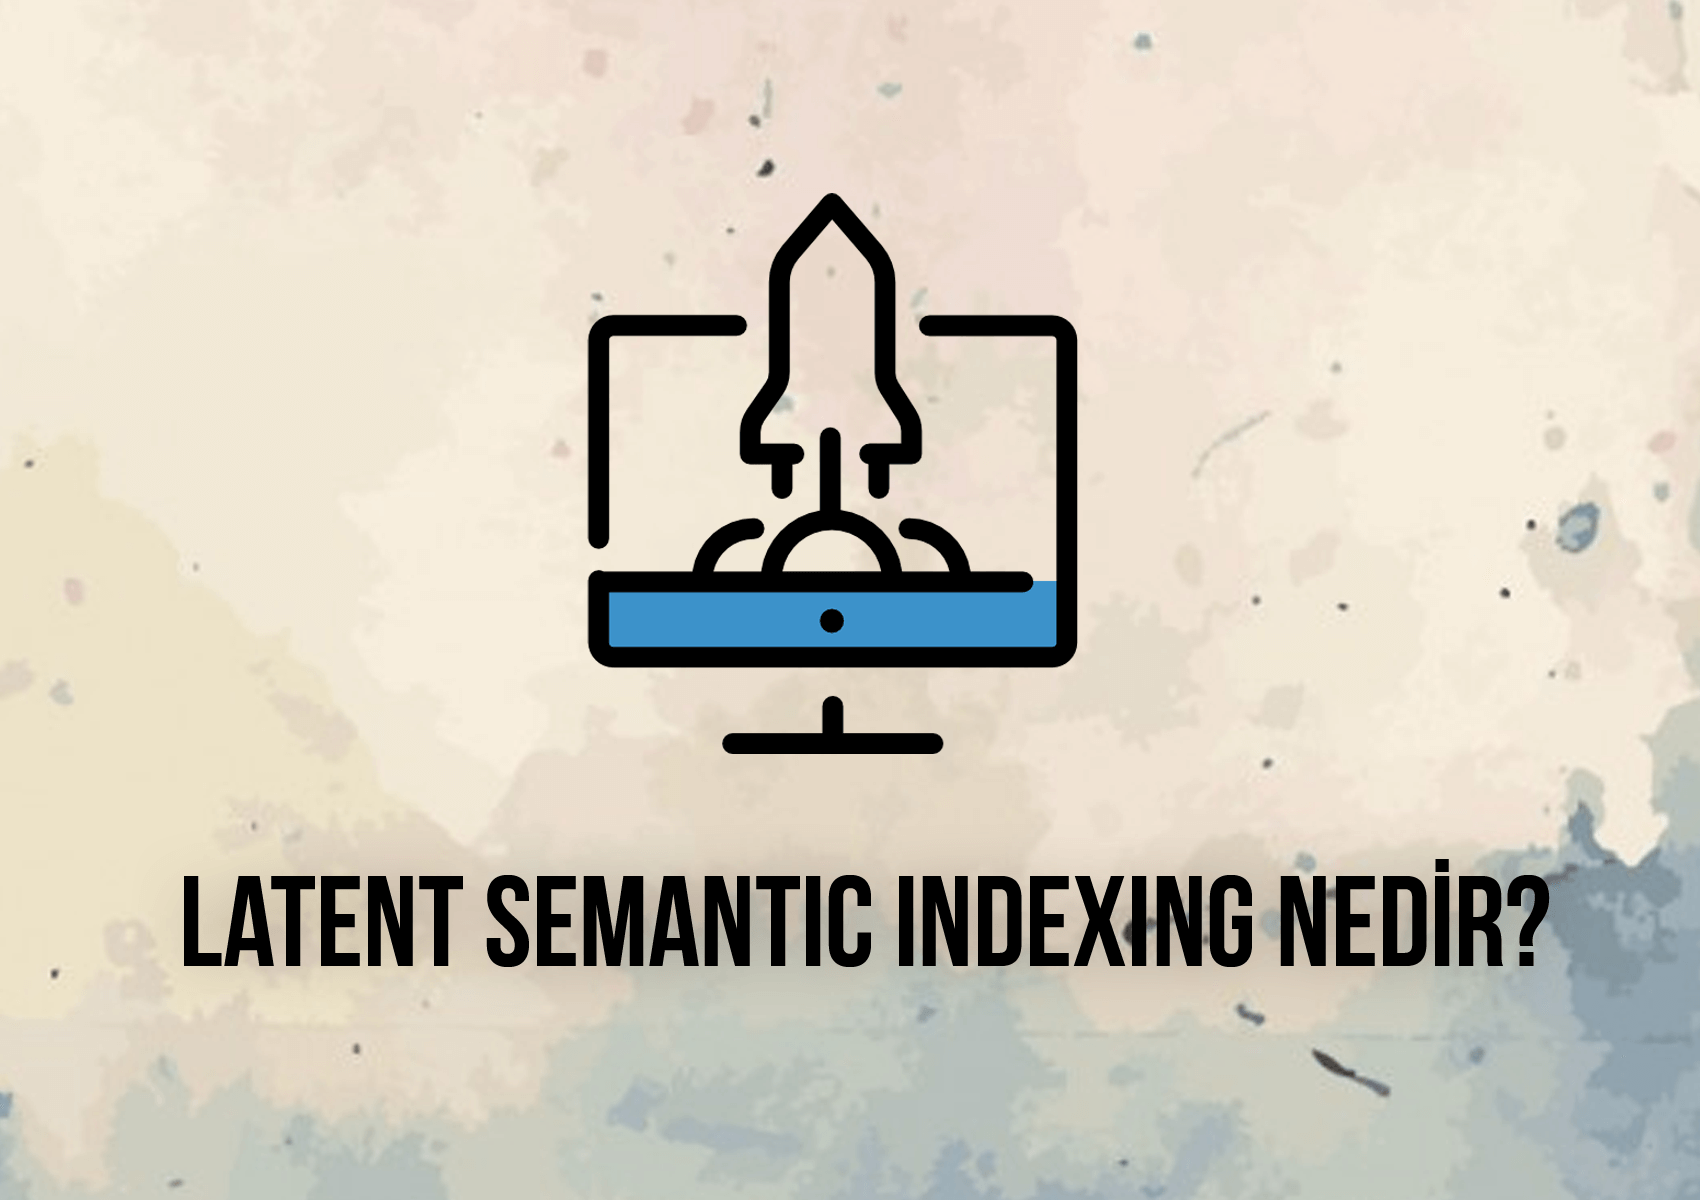 Latent Semantic Indexing